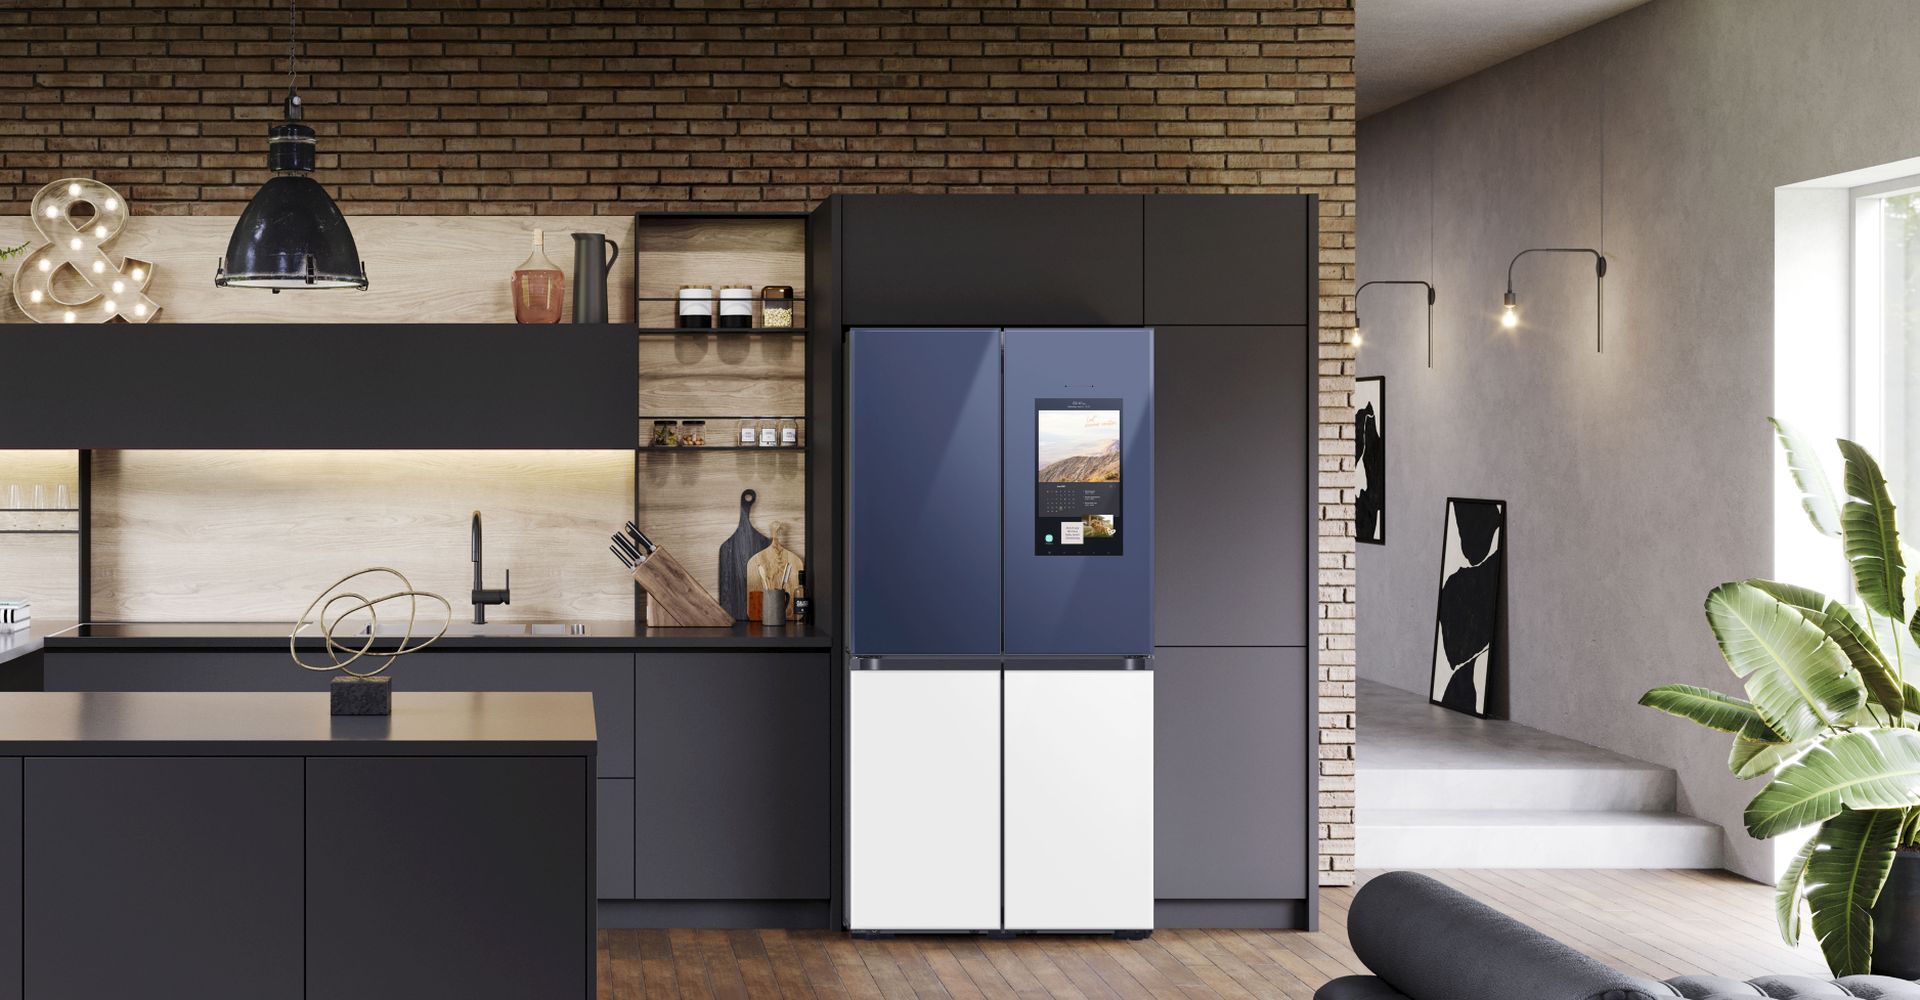 samsung-bespoke-refrigerators-with-stylish-design-giant-touchscreen